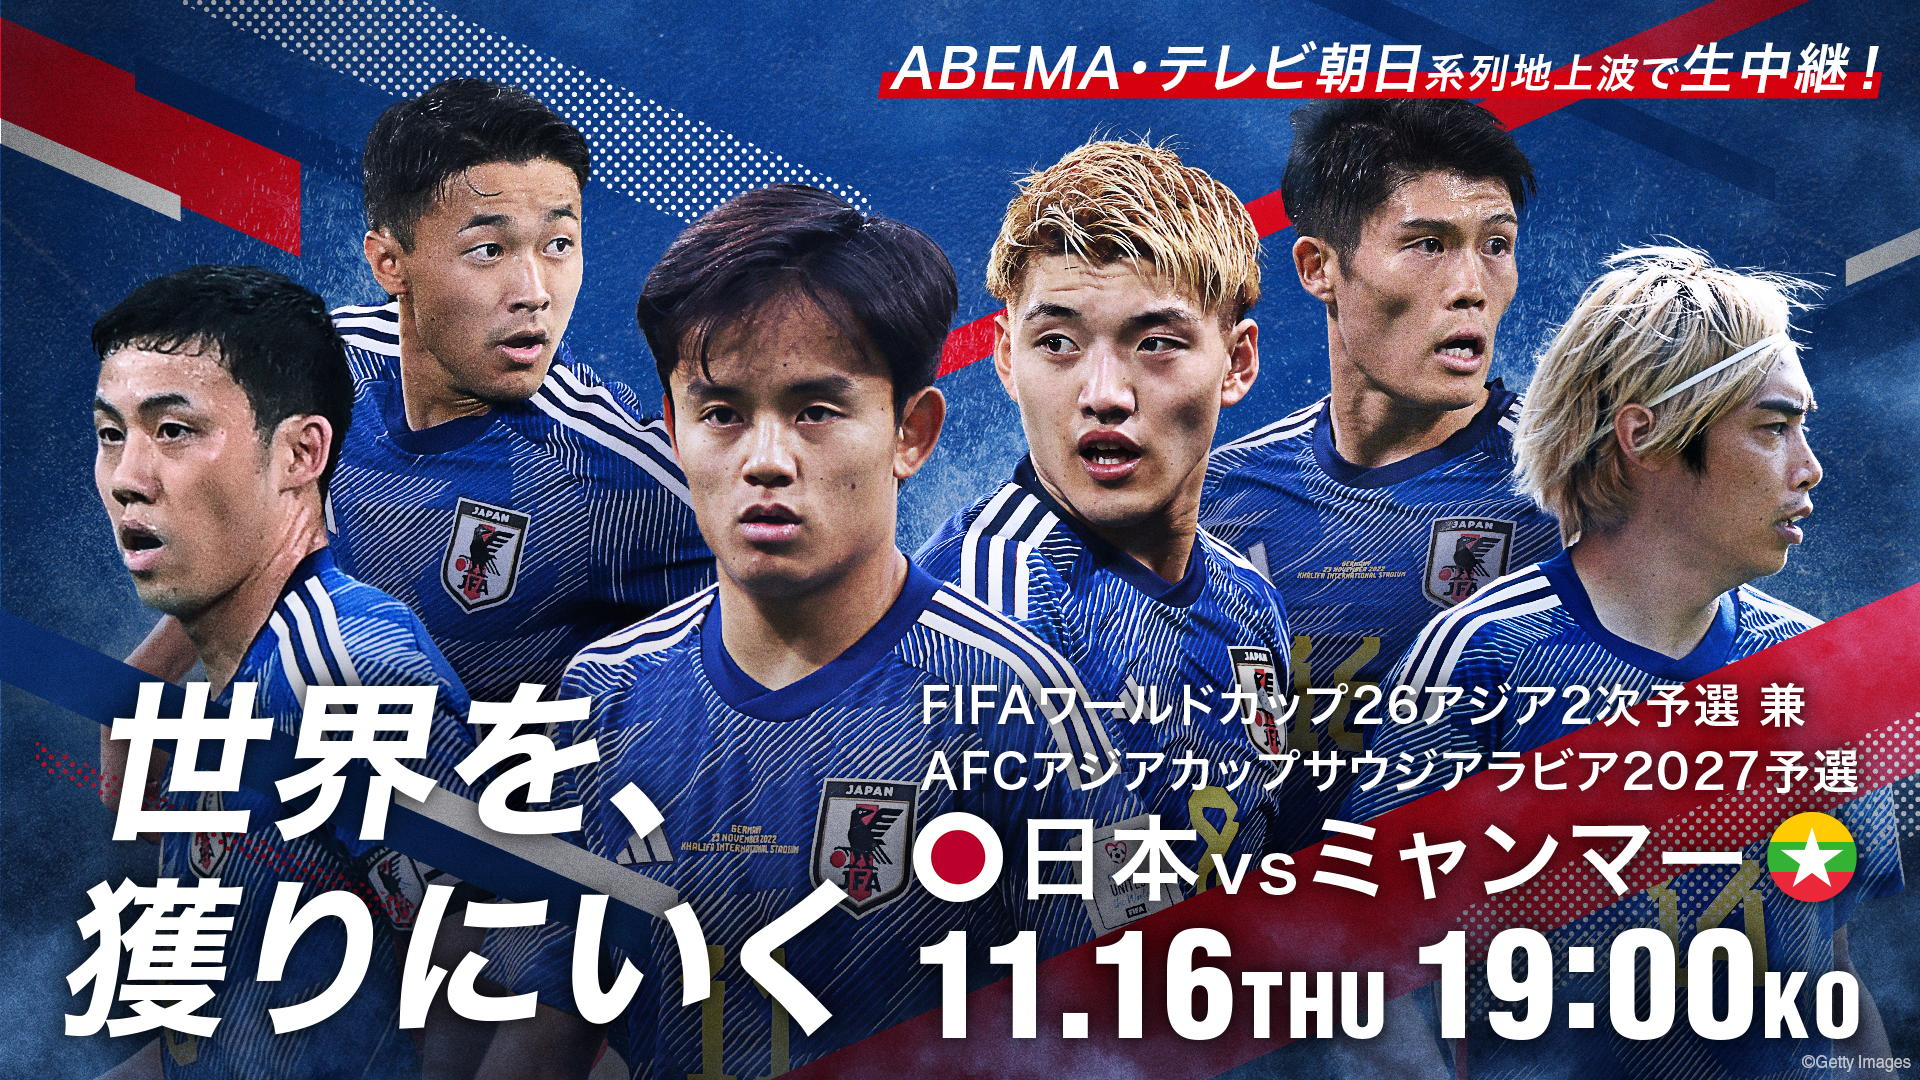 ABEMA「サッカー日本代表」